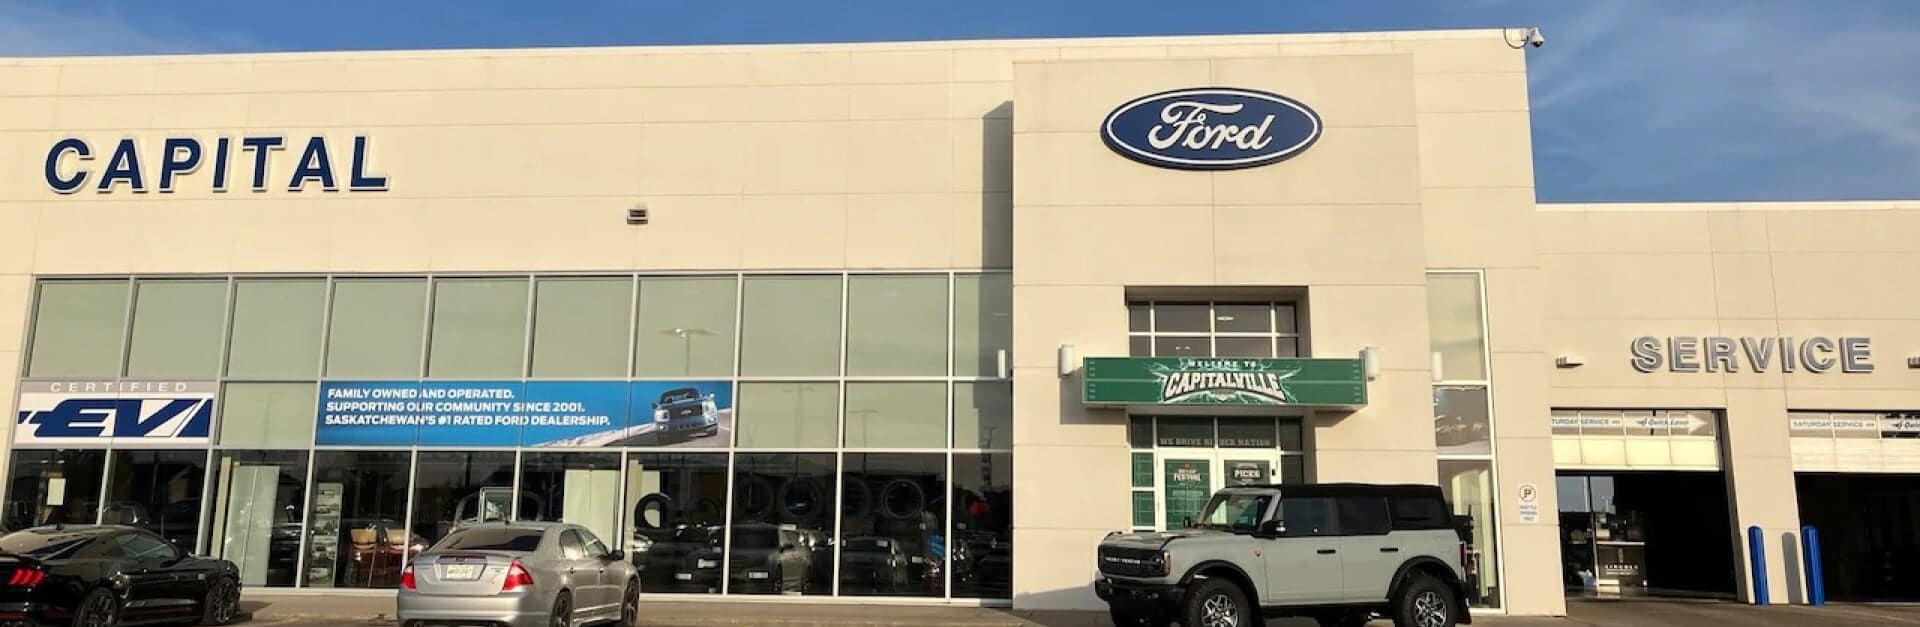 Capital Ford dealership